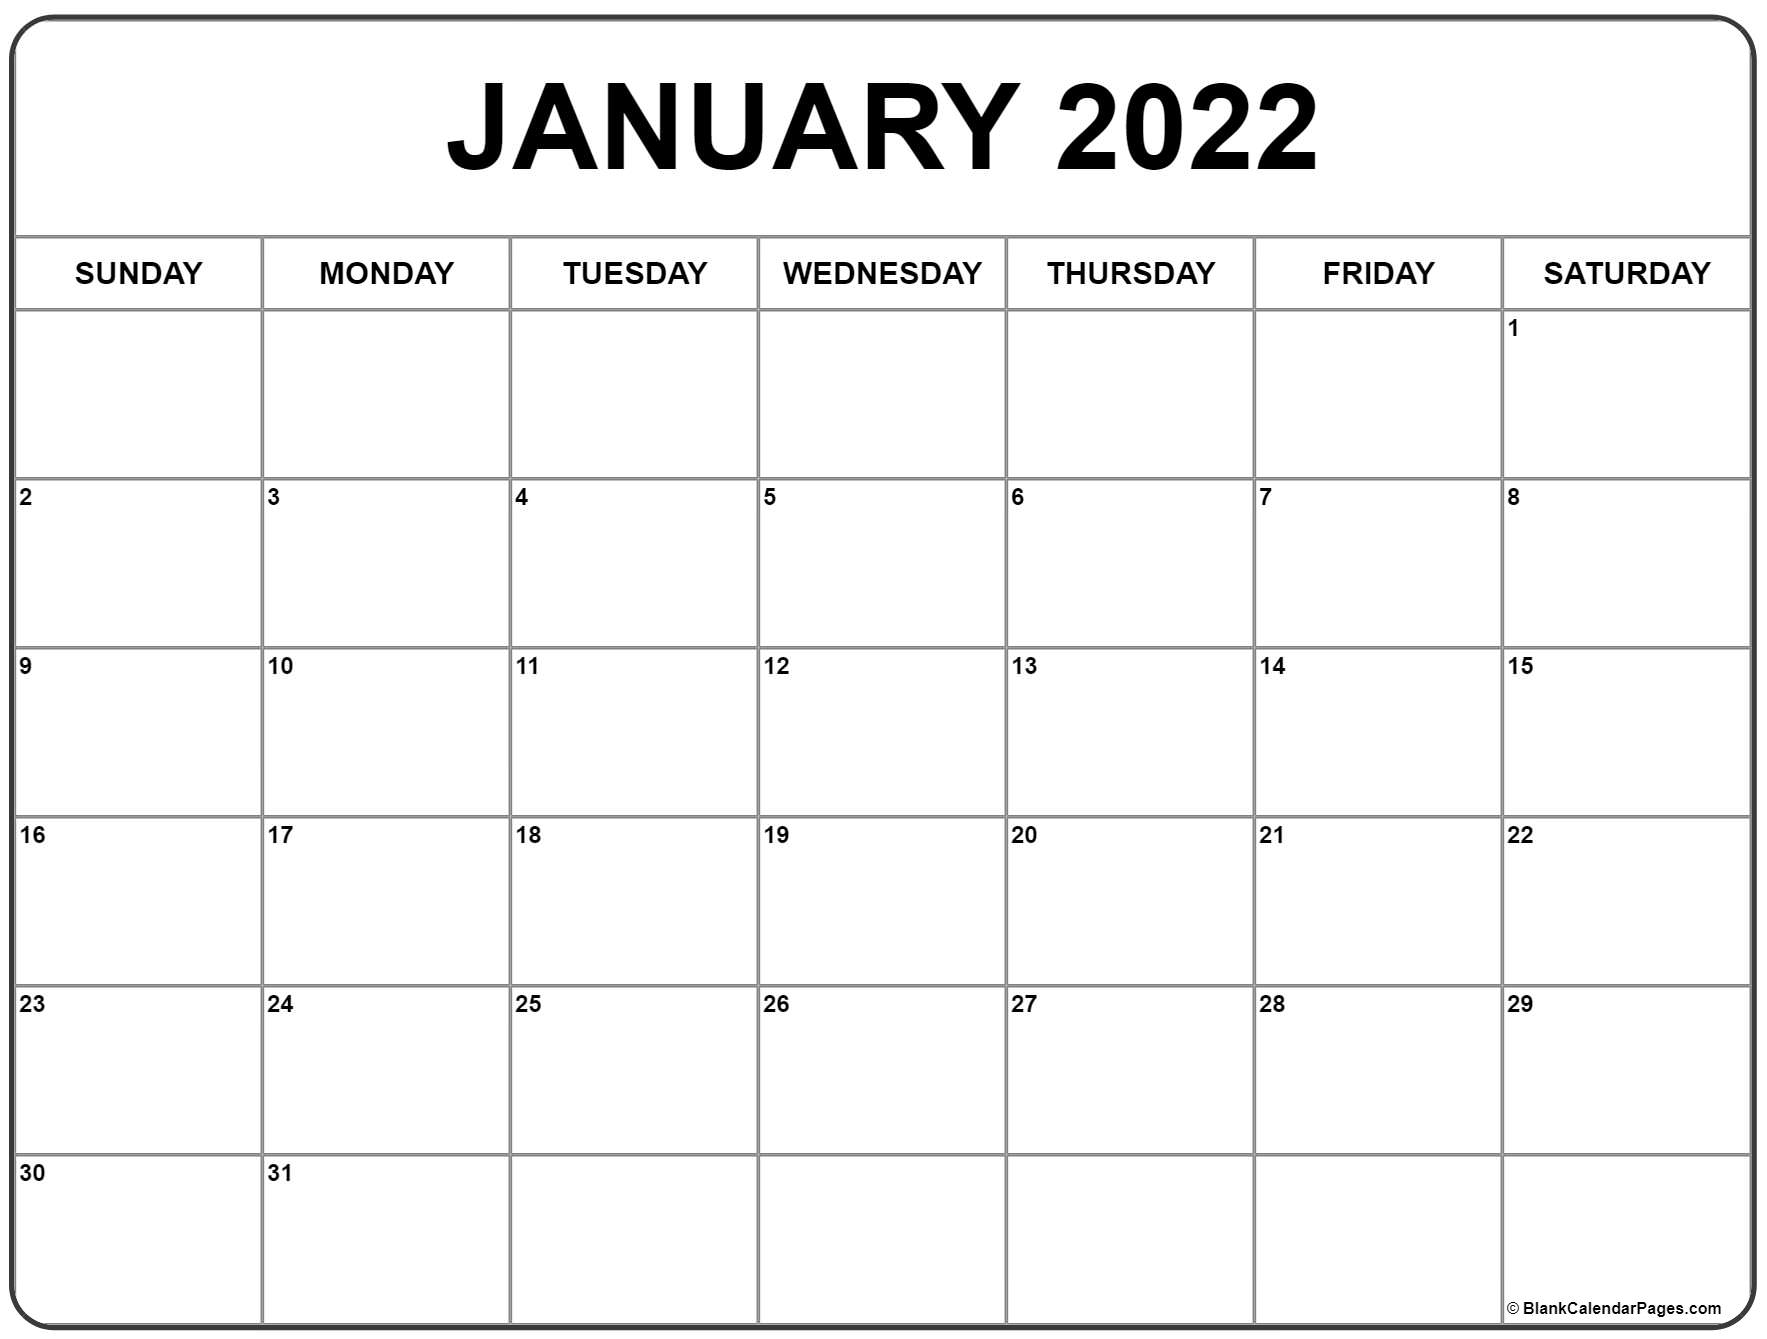 Catch Calendar 2022 January February March April